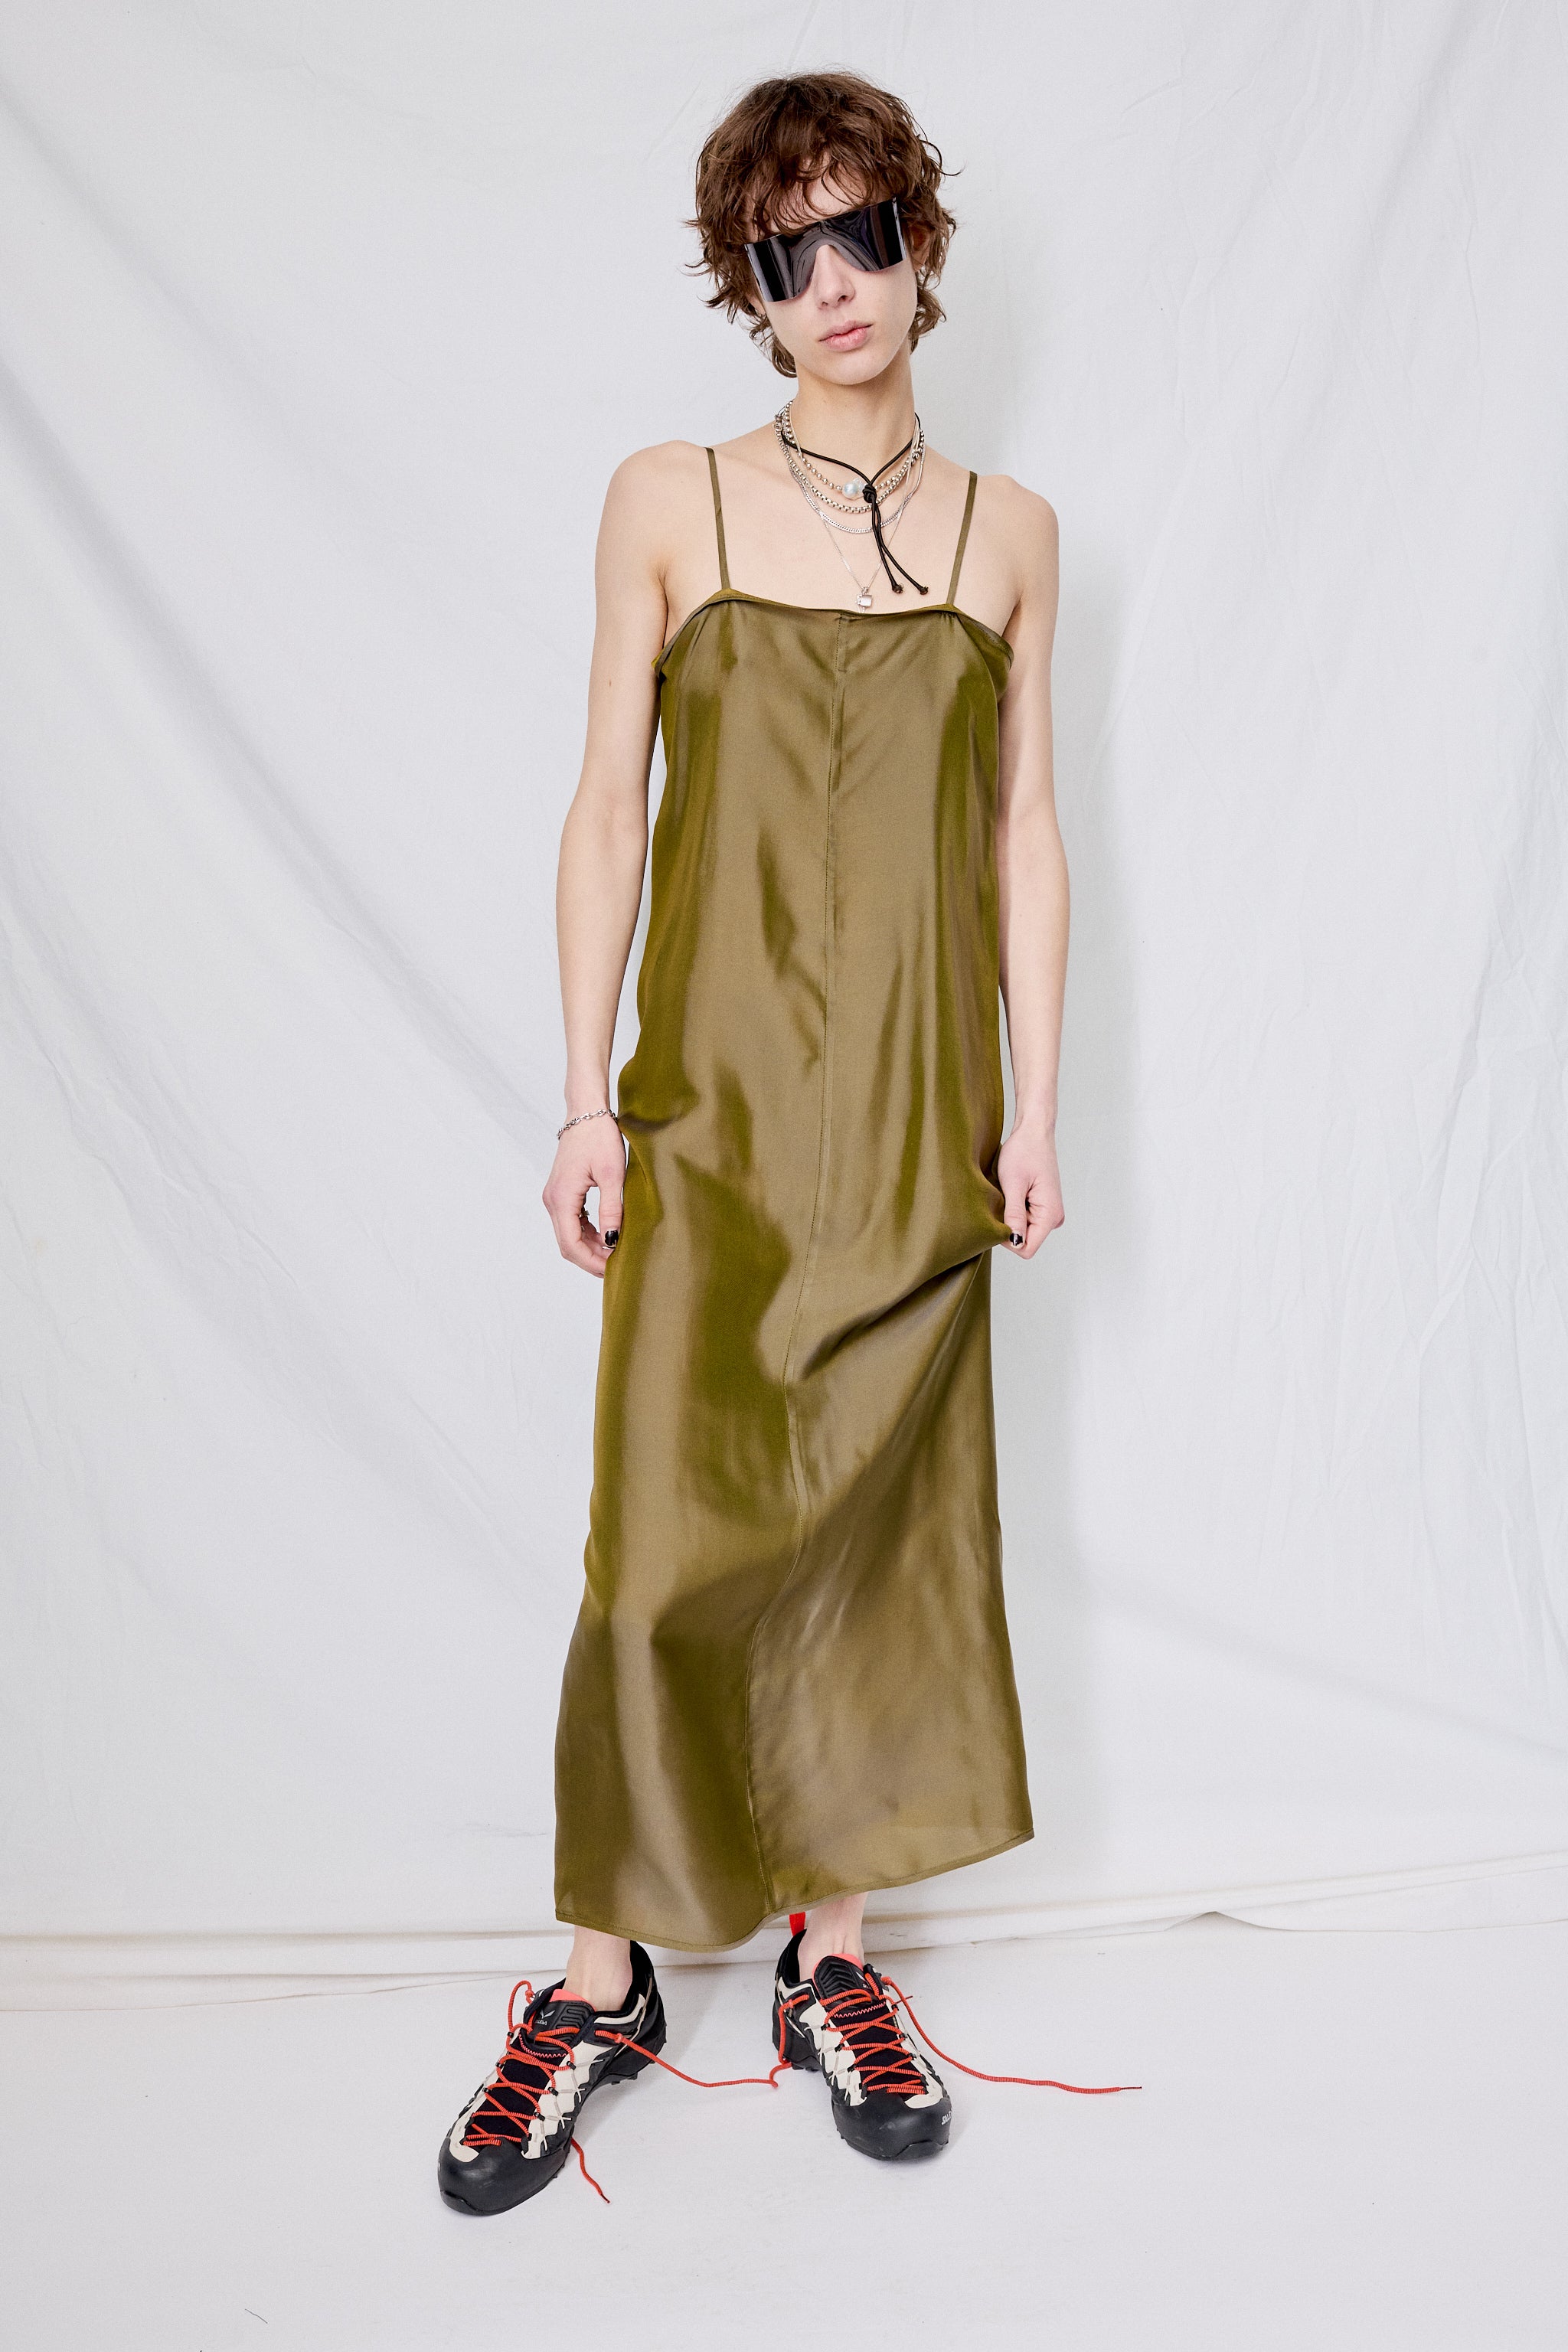 gabriela coll garments ドレス ワンピース - ファッション